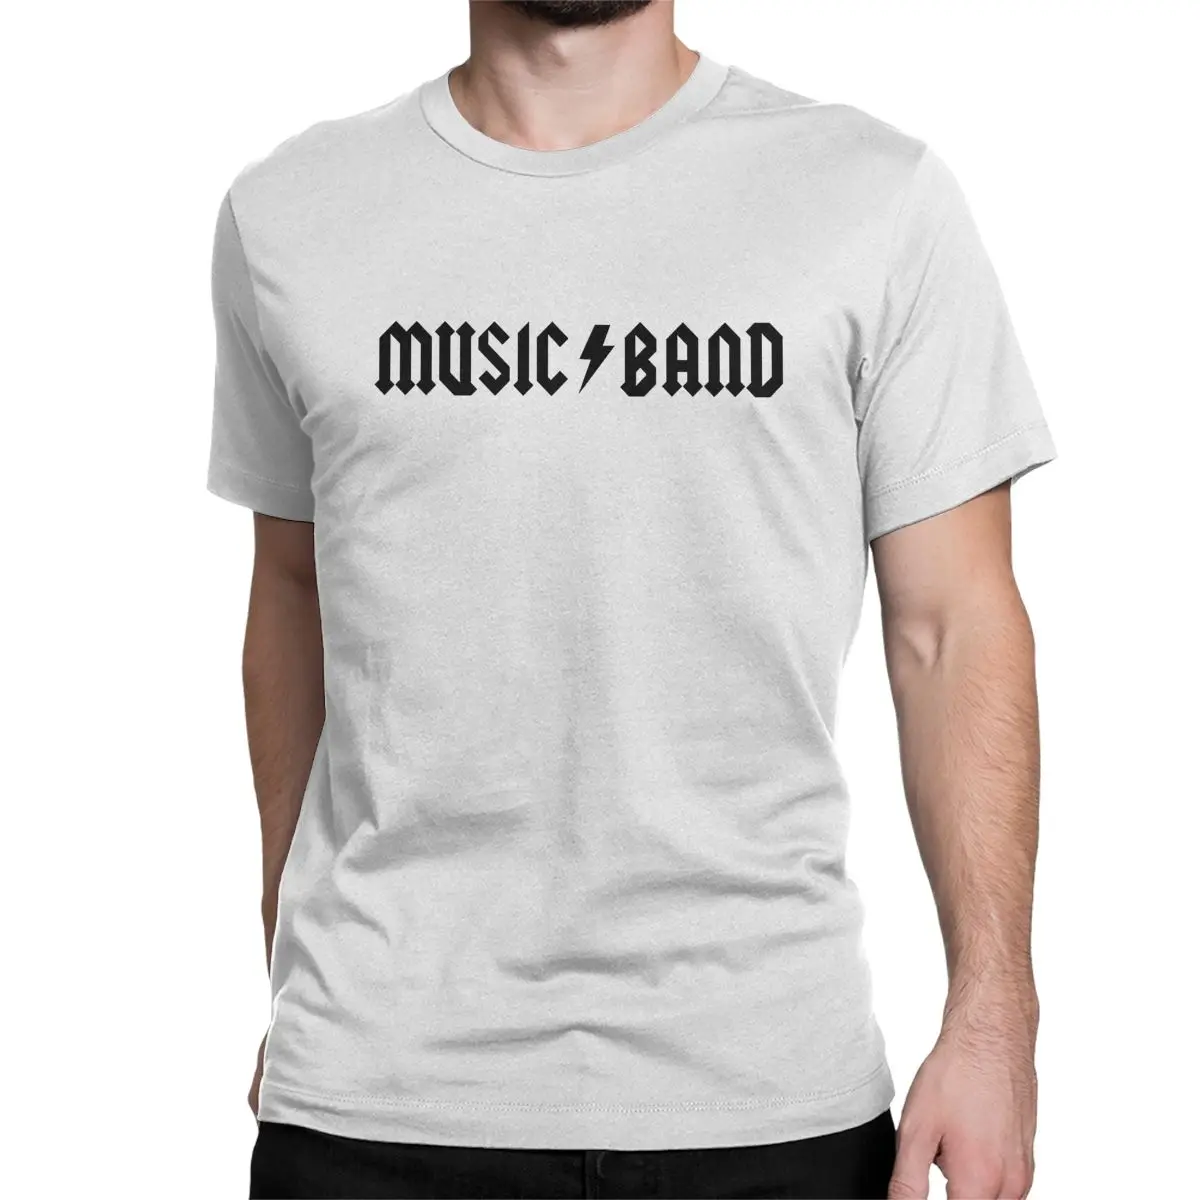 Music Band Steve Buscemi T for Men Women Funny T-Shirts How Do You Do Fellow Kids Meme Tee Shirt Short Sleeve Clothes _ - AliExpress Mobile